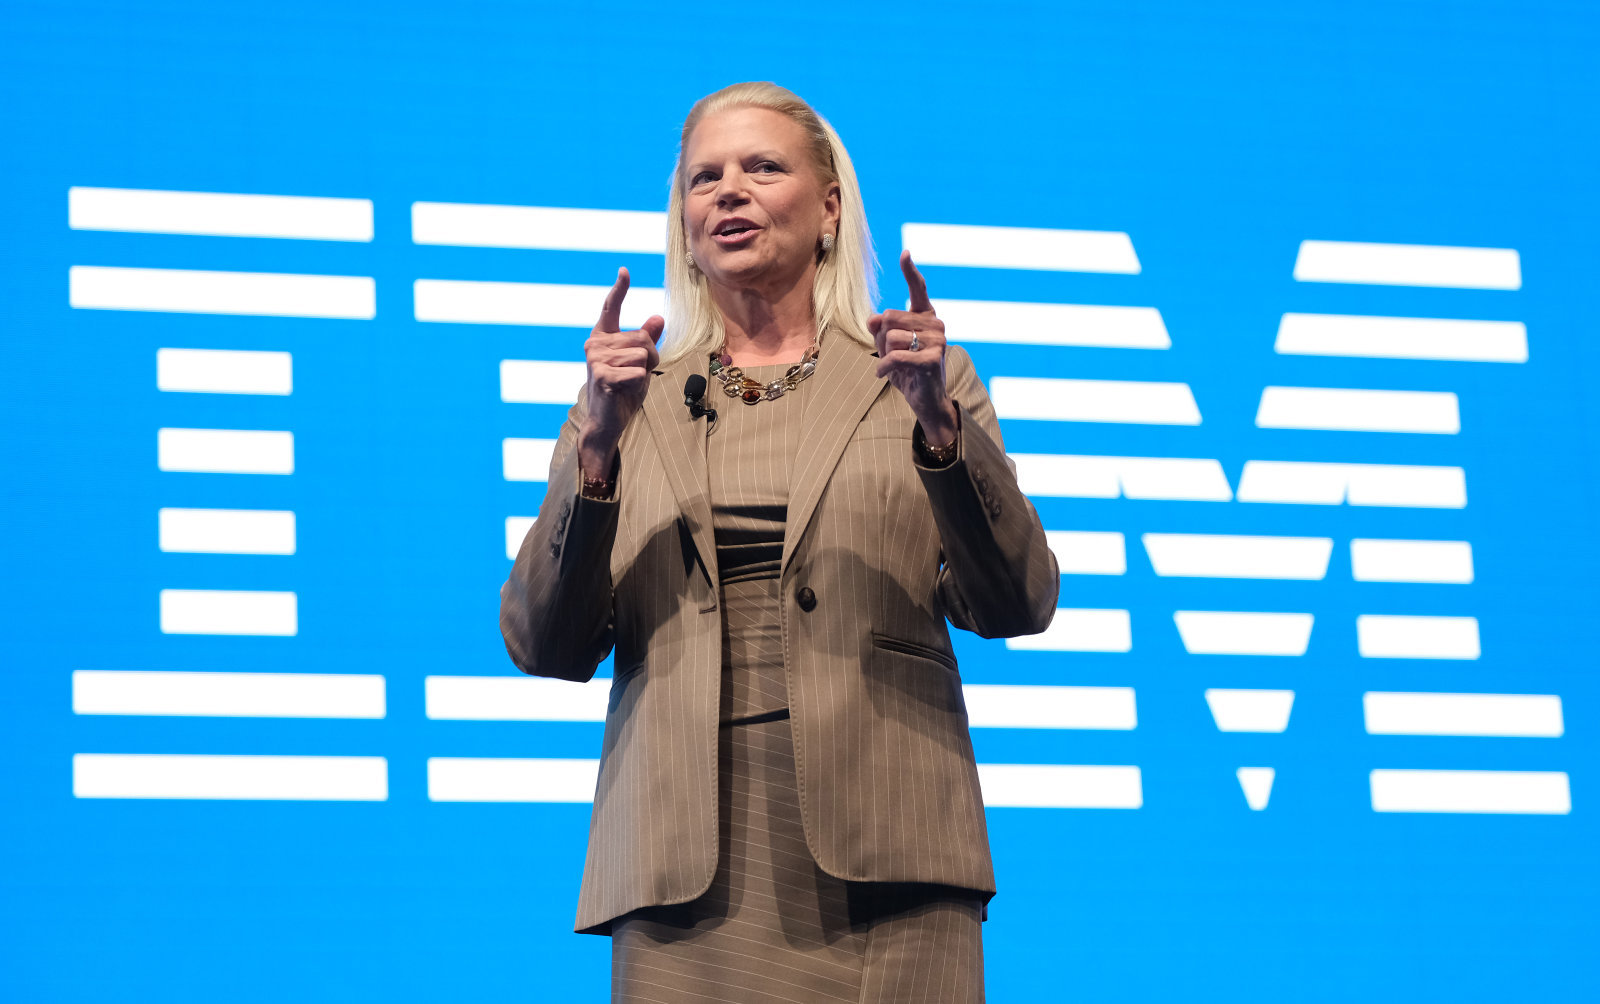 IBM CEO Virginia Rometty To Step Down